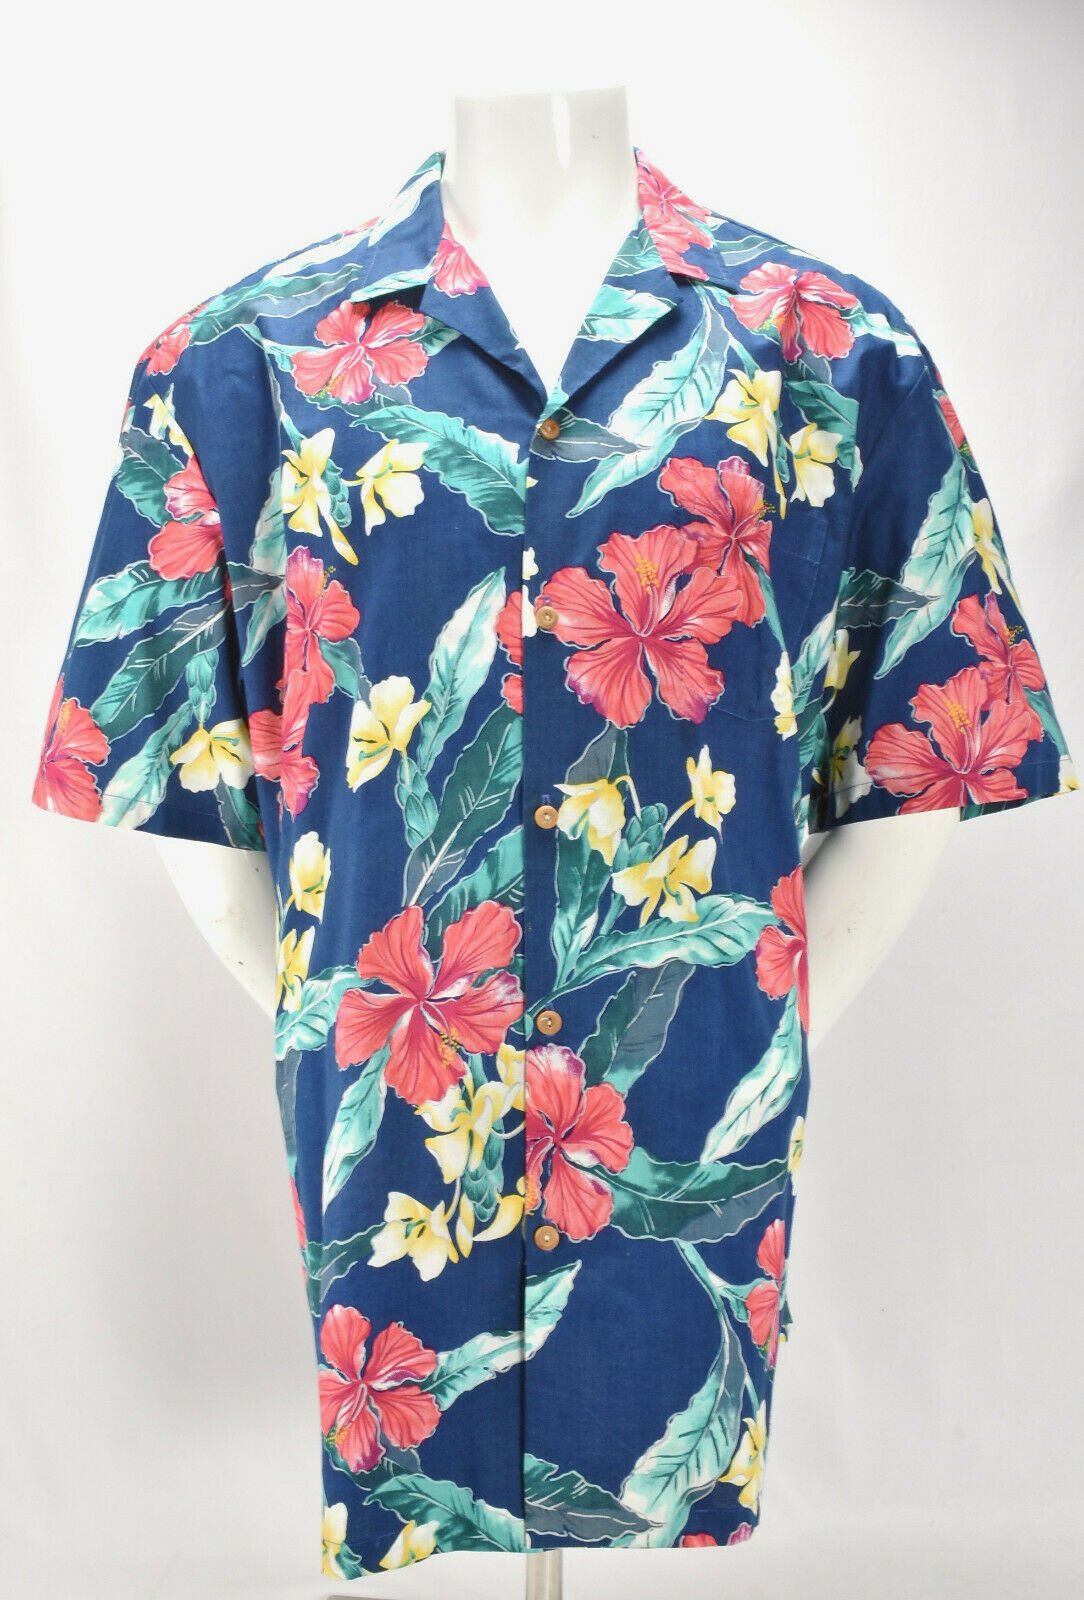 Paradise Found Super Hibiscus Teal Hawaiian Shirt Small